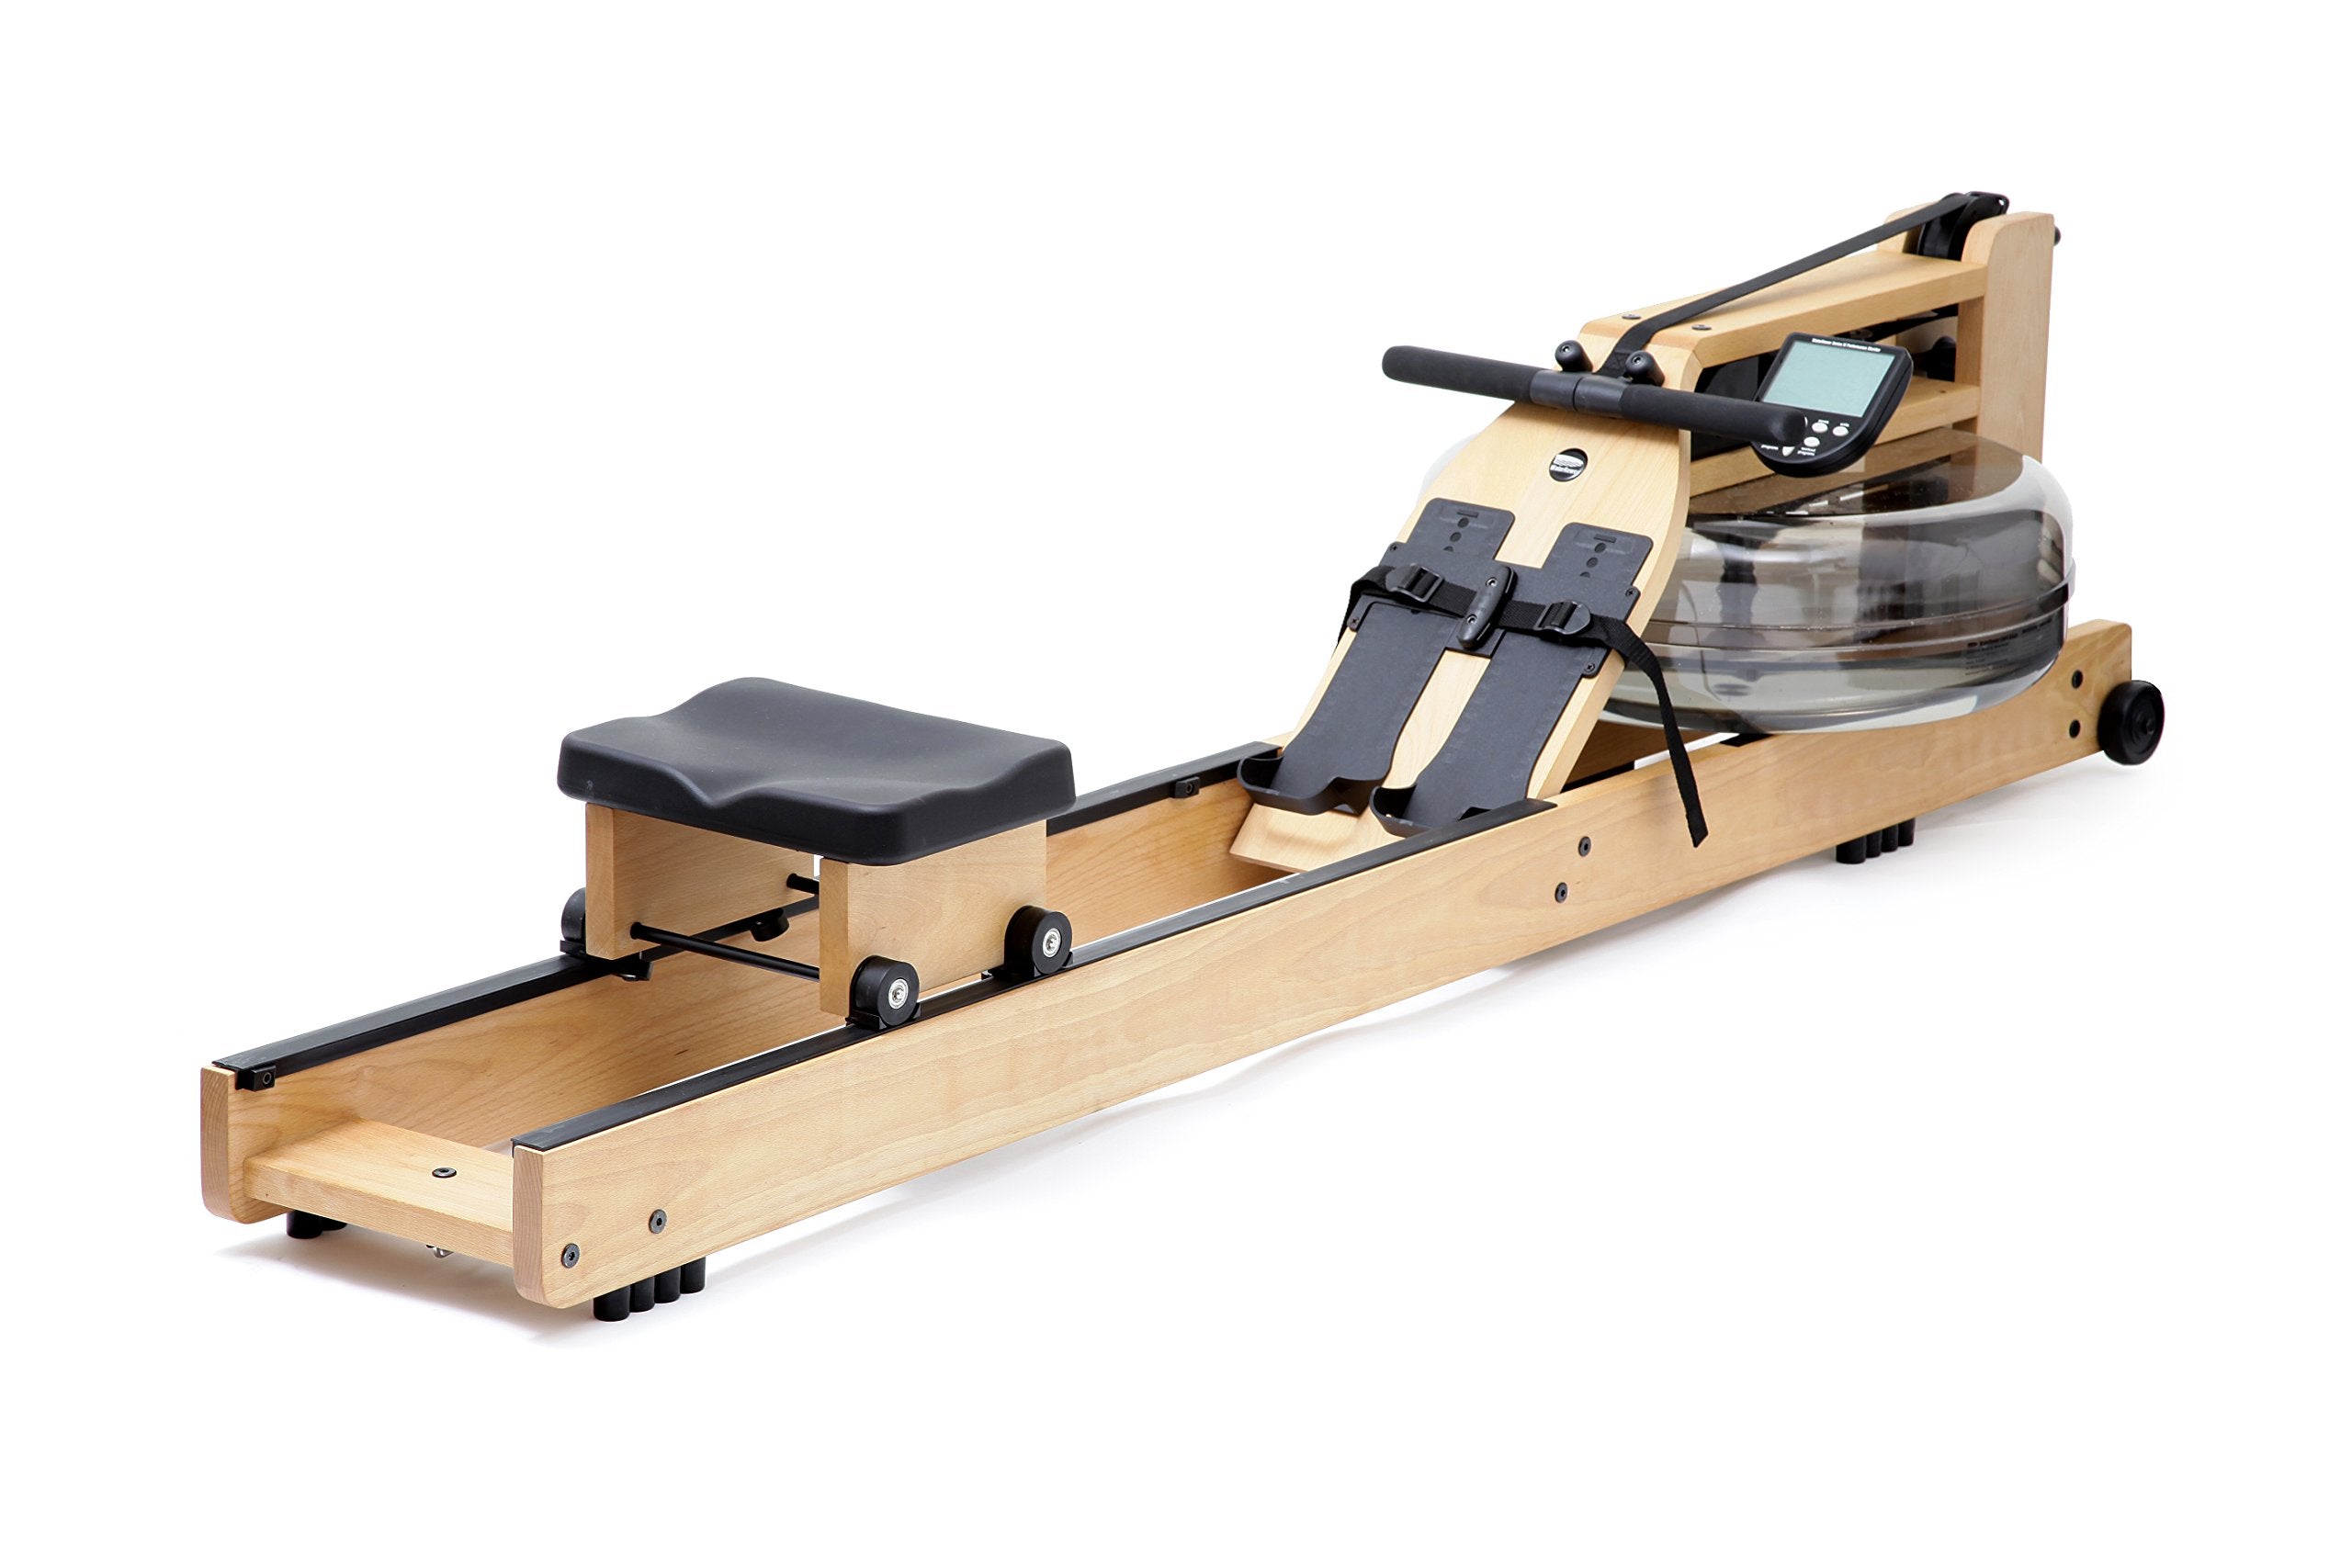 WaterRower Beech Wood Rowing Machine (S4 Monitor)